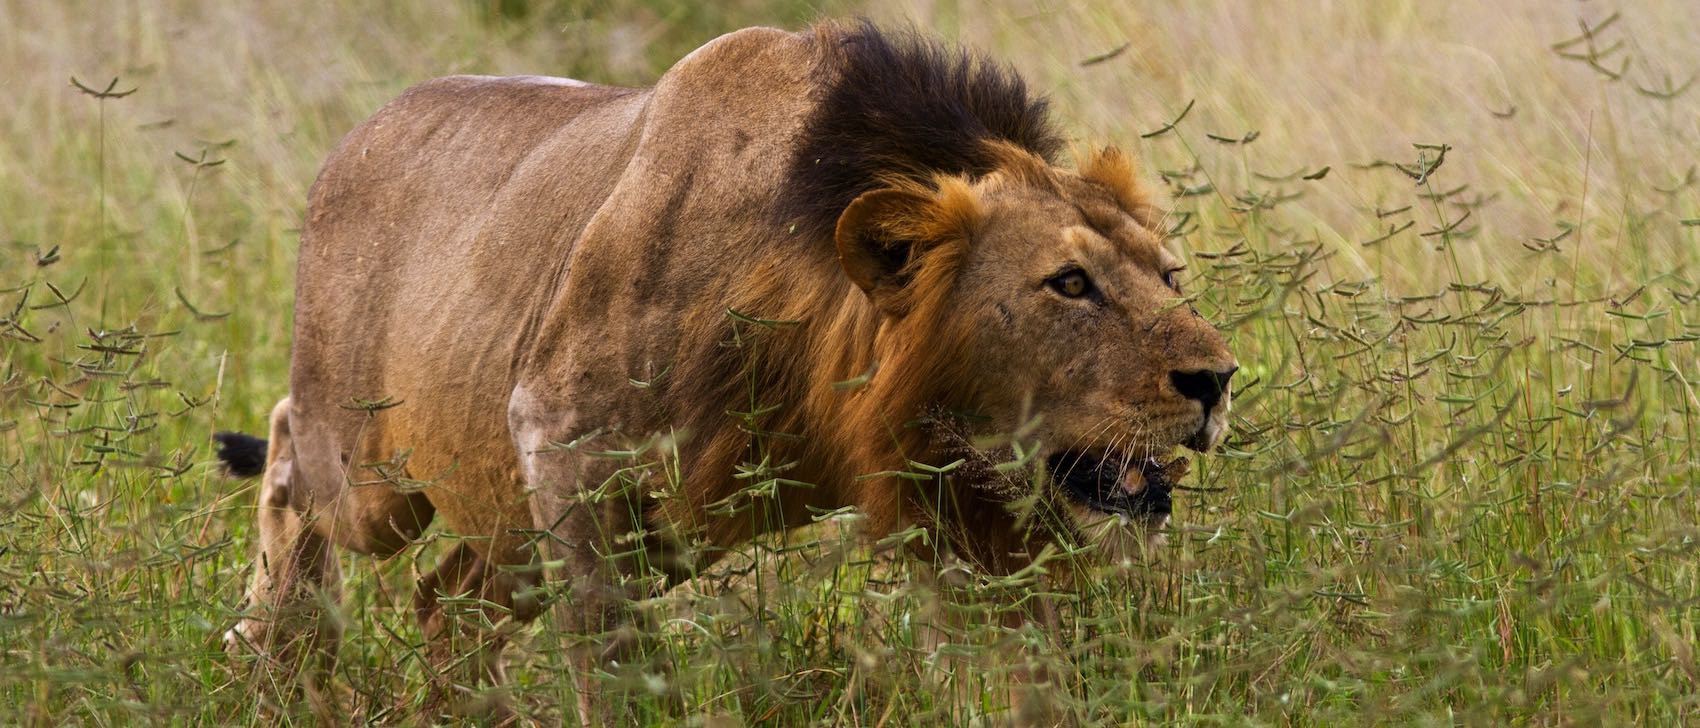 Lion dominant a la chasse dans la savane